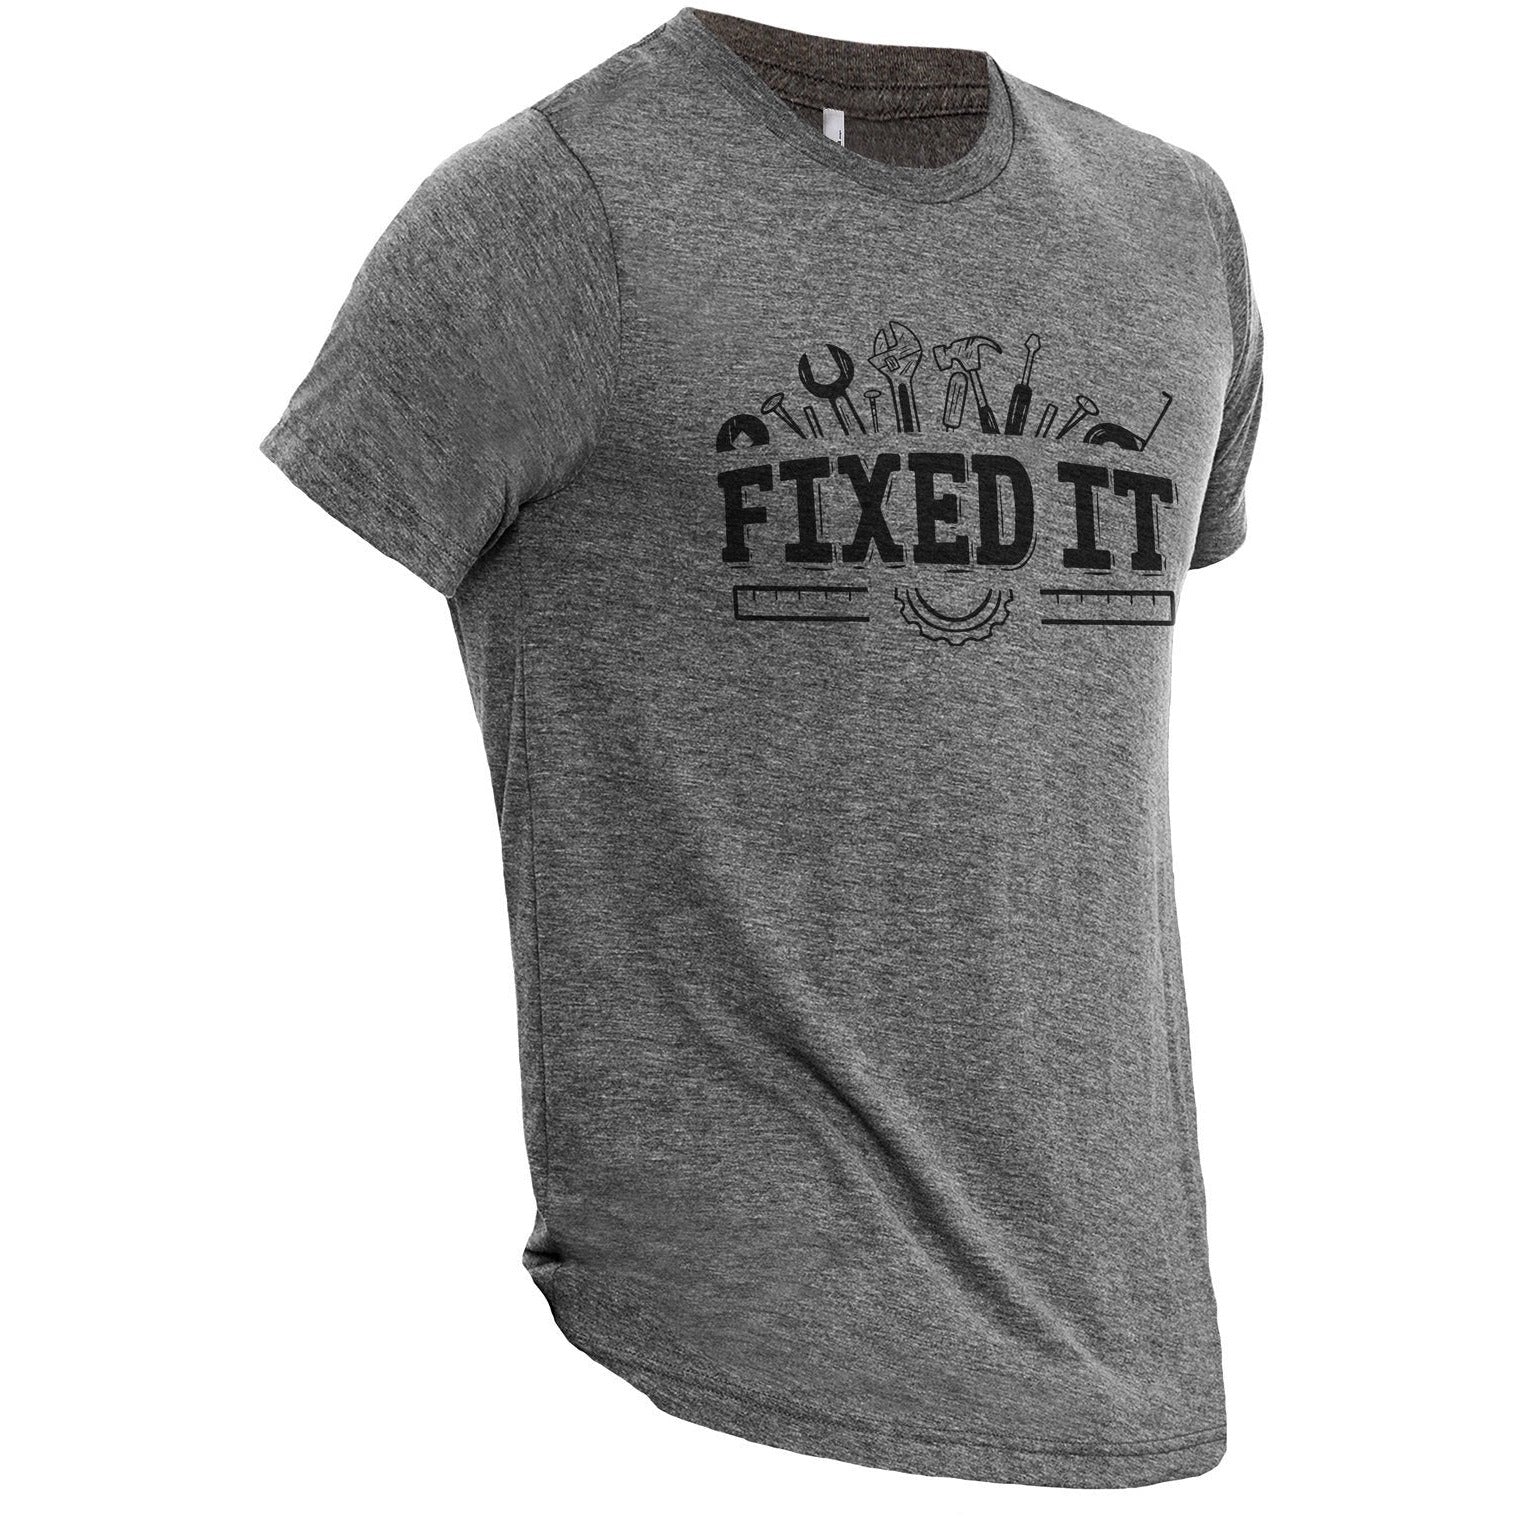 Fixed It Heather Grey Printed Graphic Men's Crew T-Shirt Tee